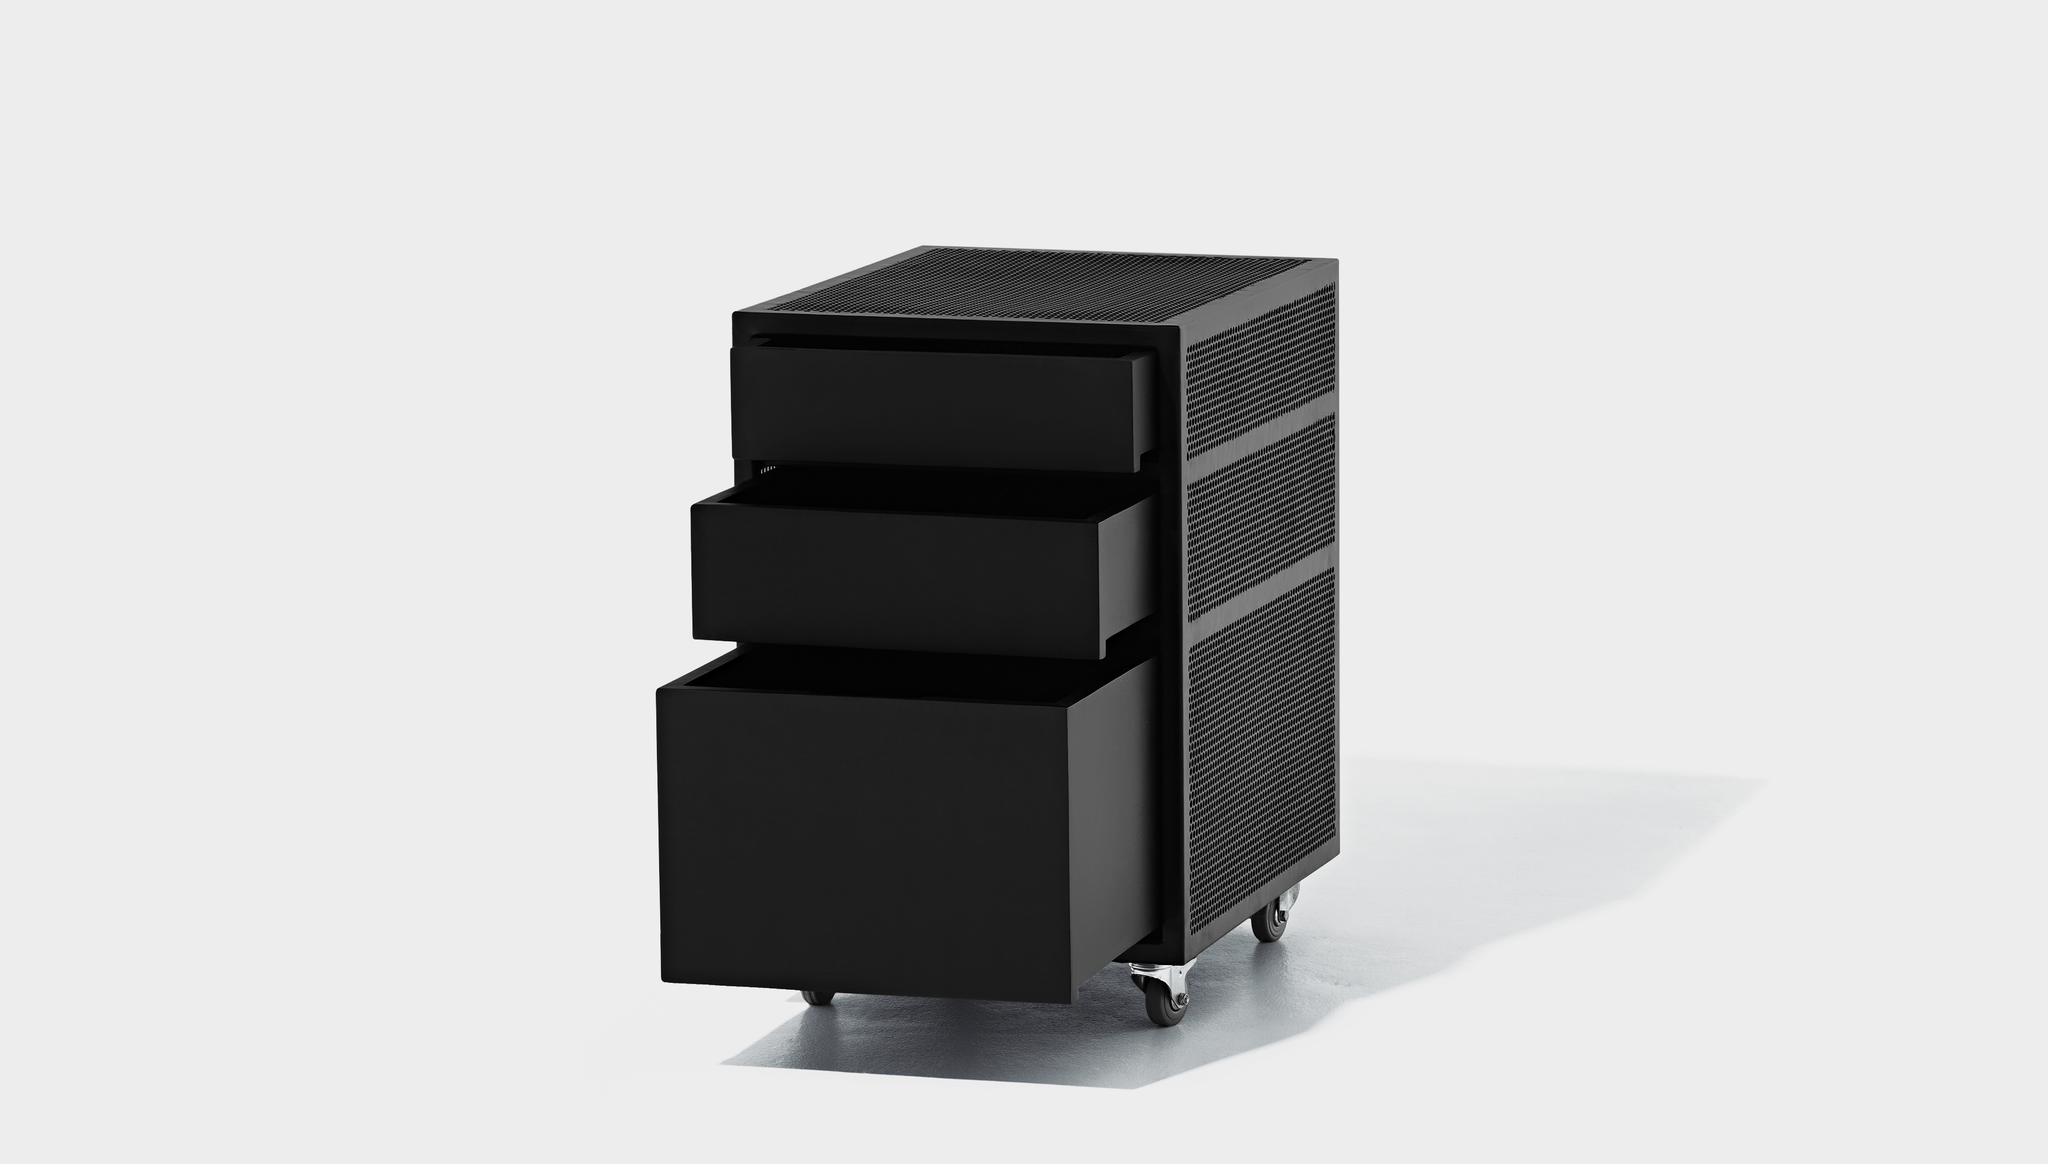 reddie-raw mobile storage 40W x 50D x 60H *cm / Metal~Black NCW Desk Drawer Pedestal